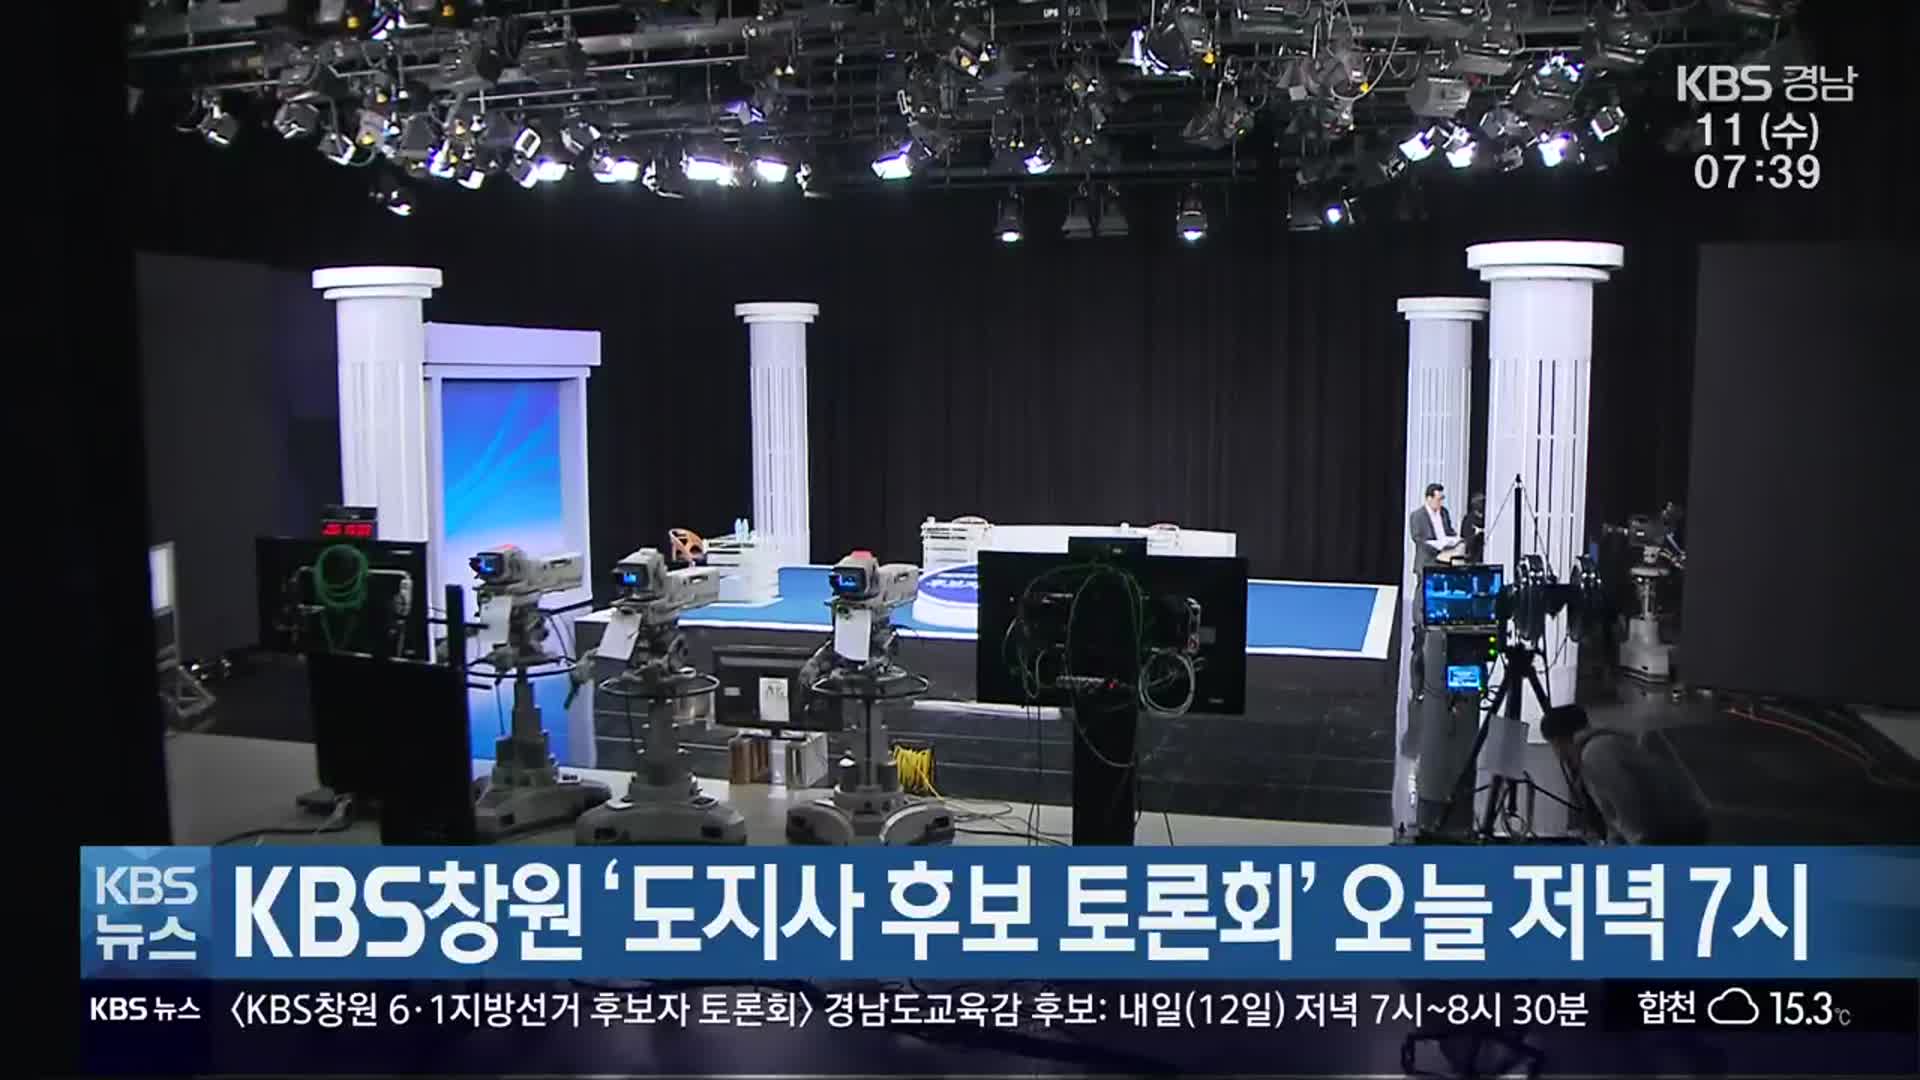 KBS창원 ‘도지사 후보 토론회’ 오늘 저녁 7시